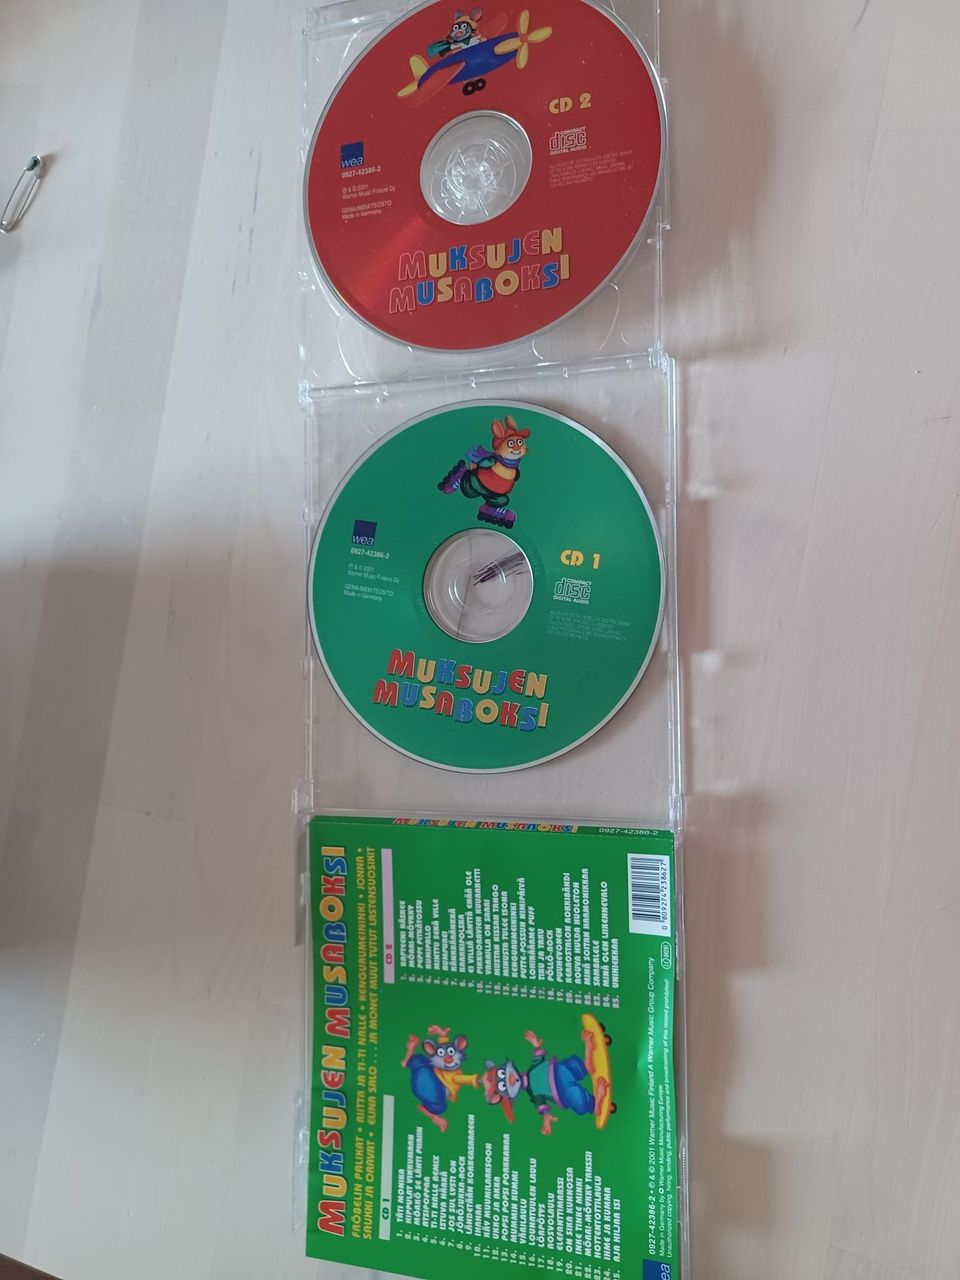 Muksujen musaboxi 2 CD